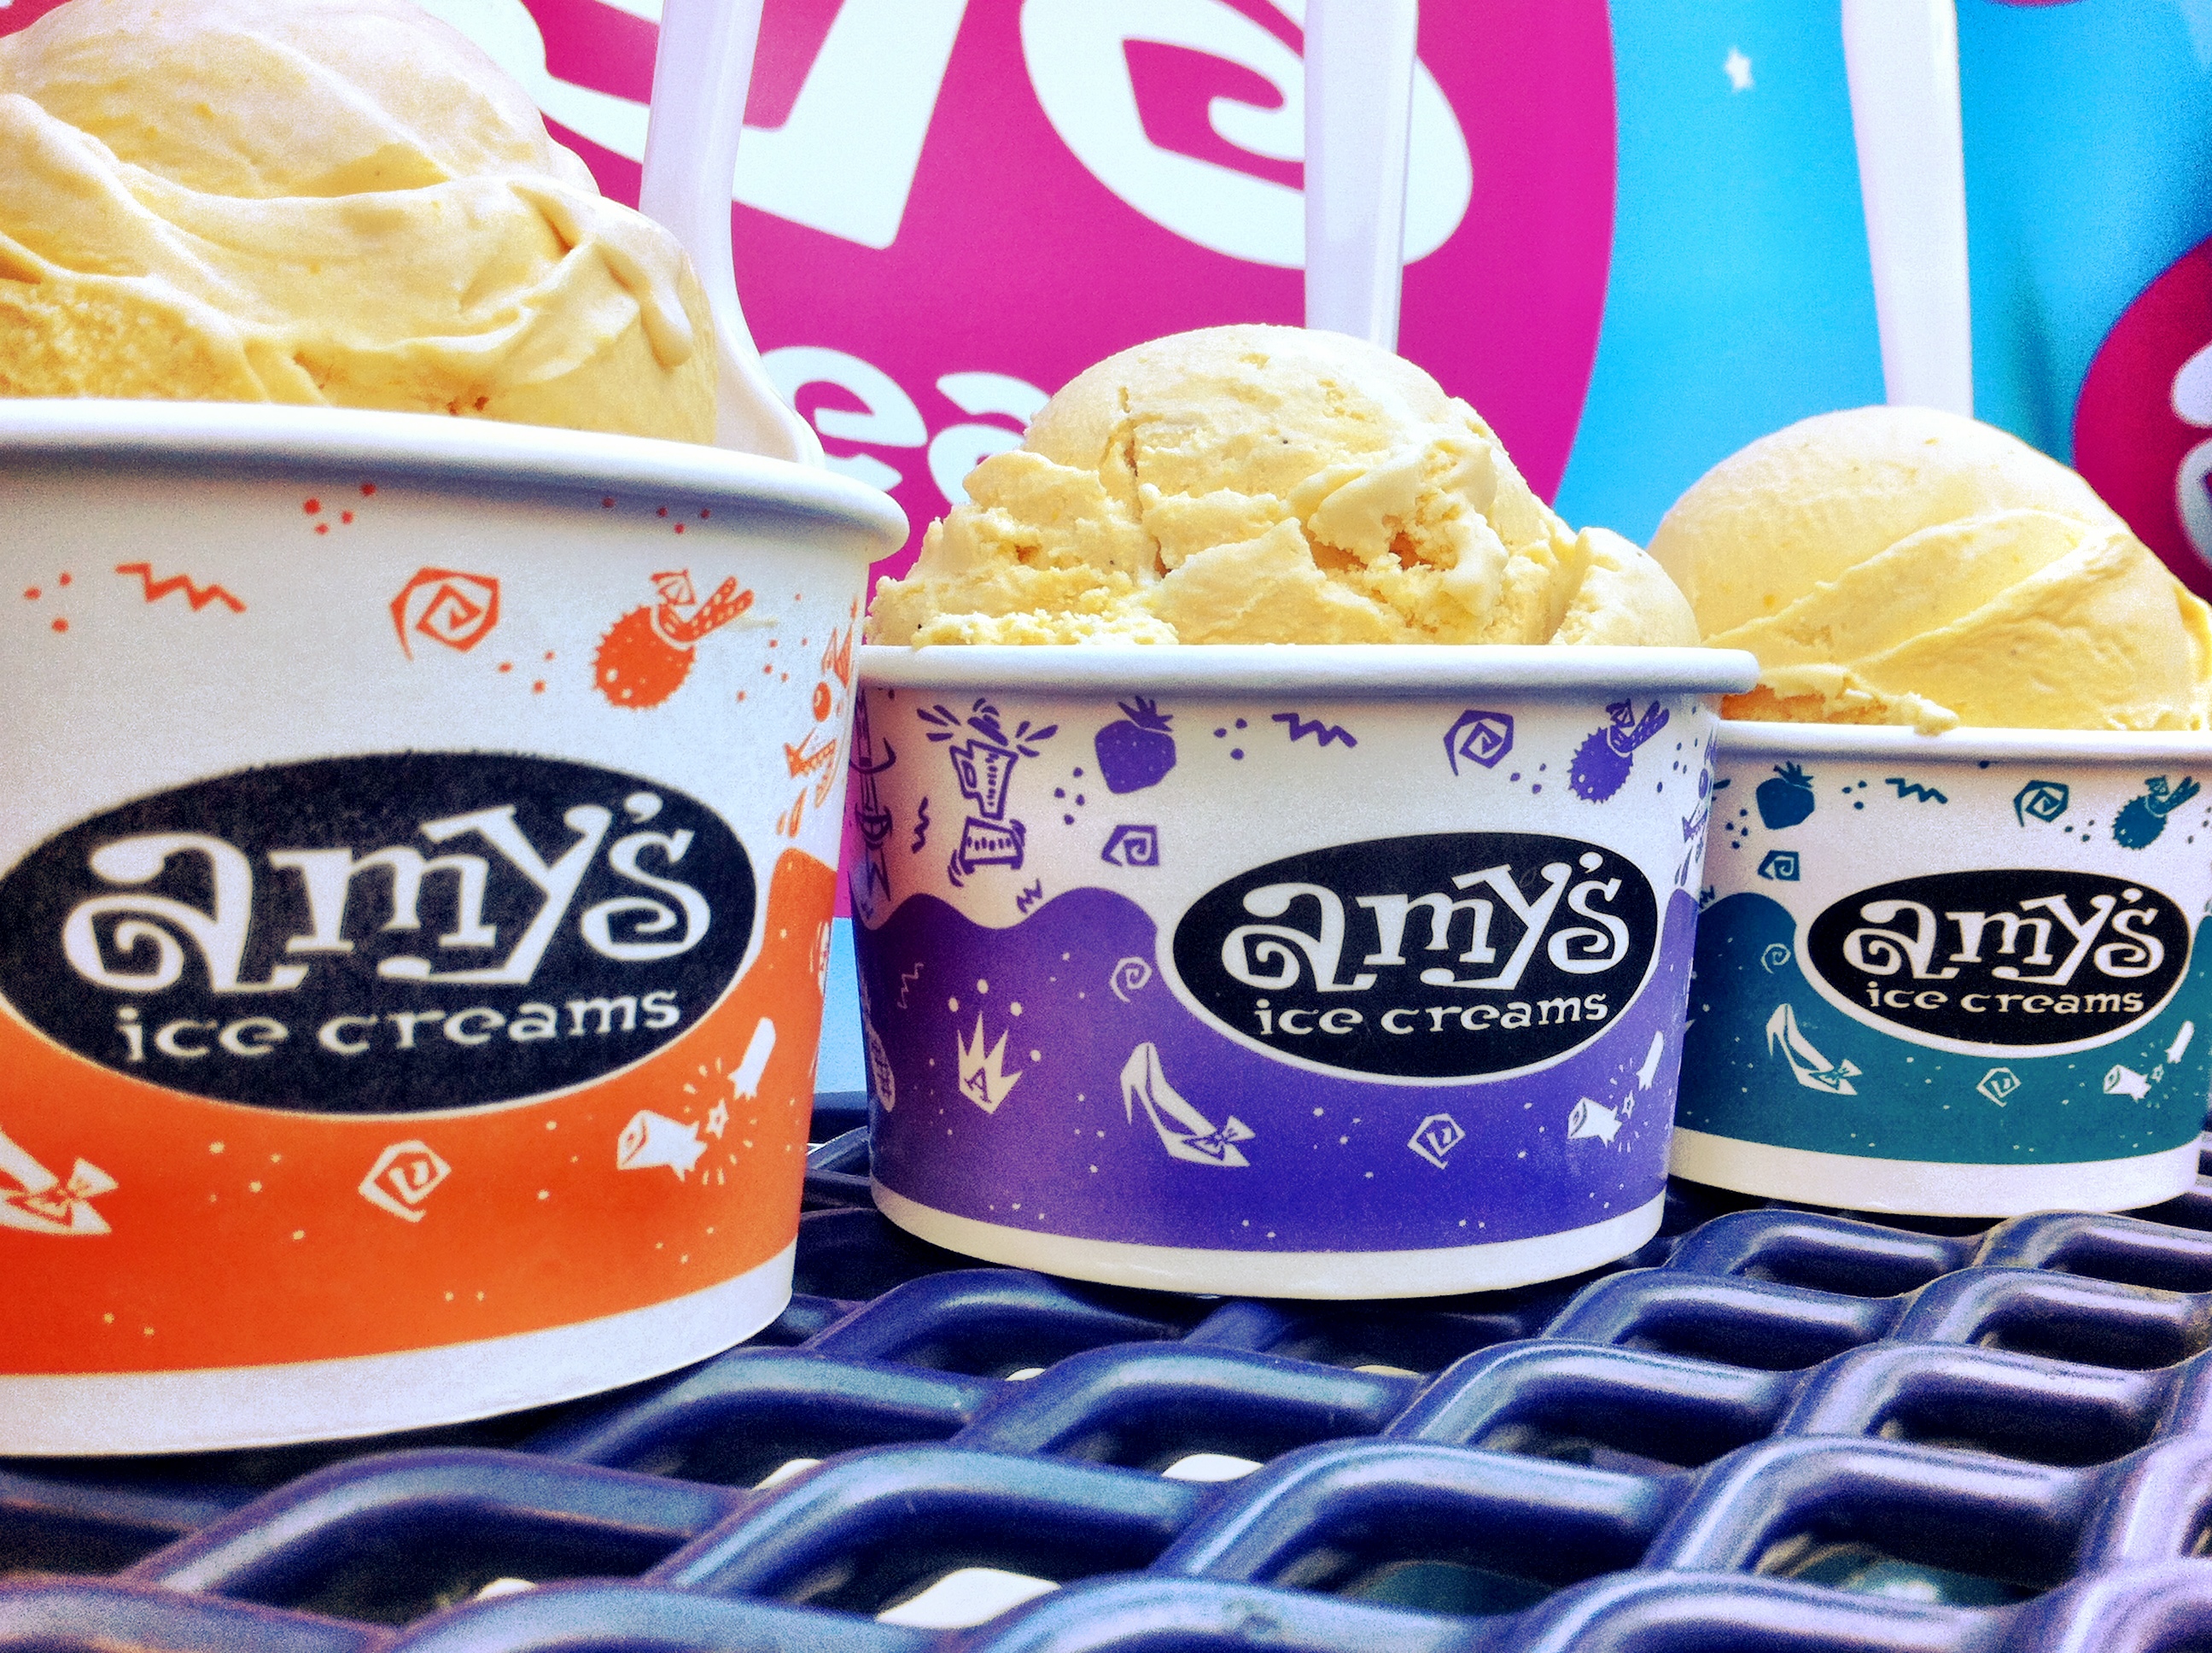 Amy’s Ice Creams ice cream on the cups